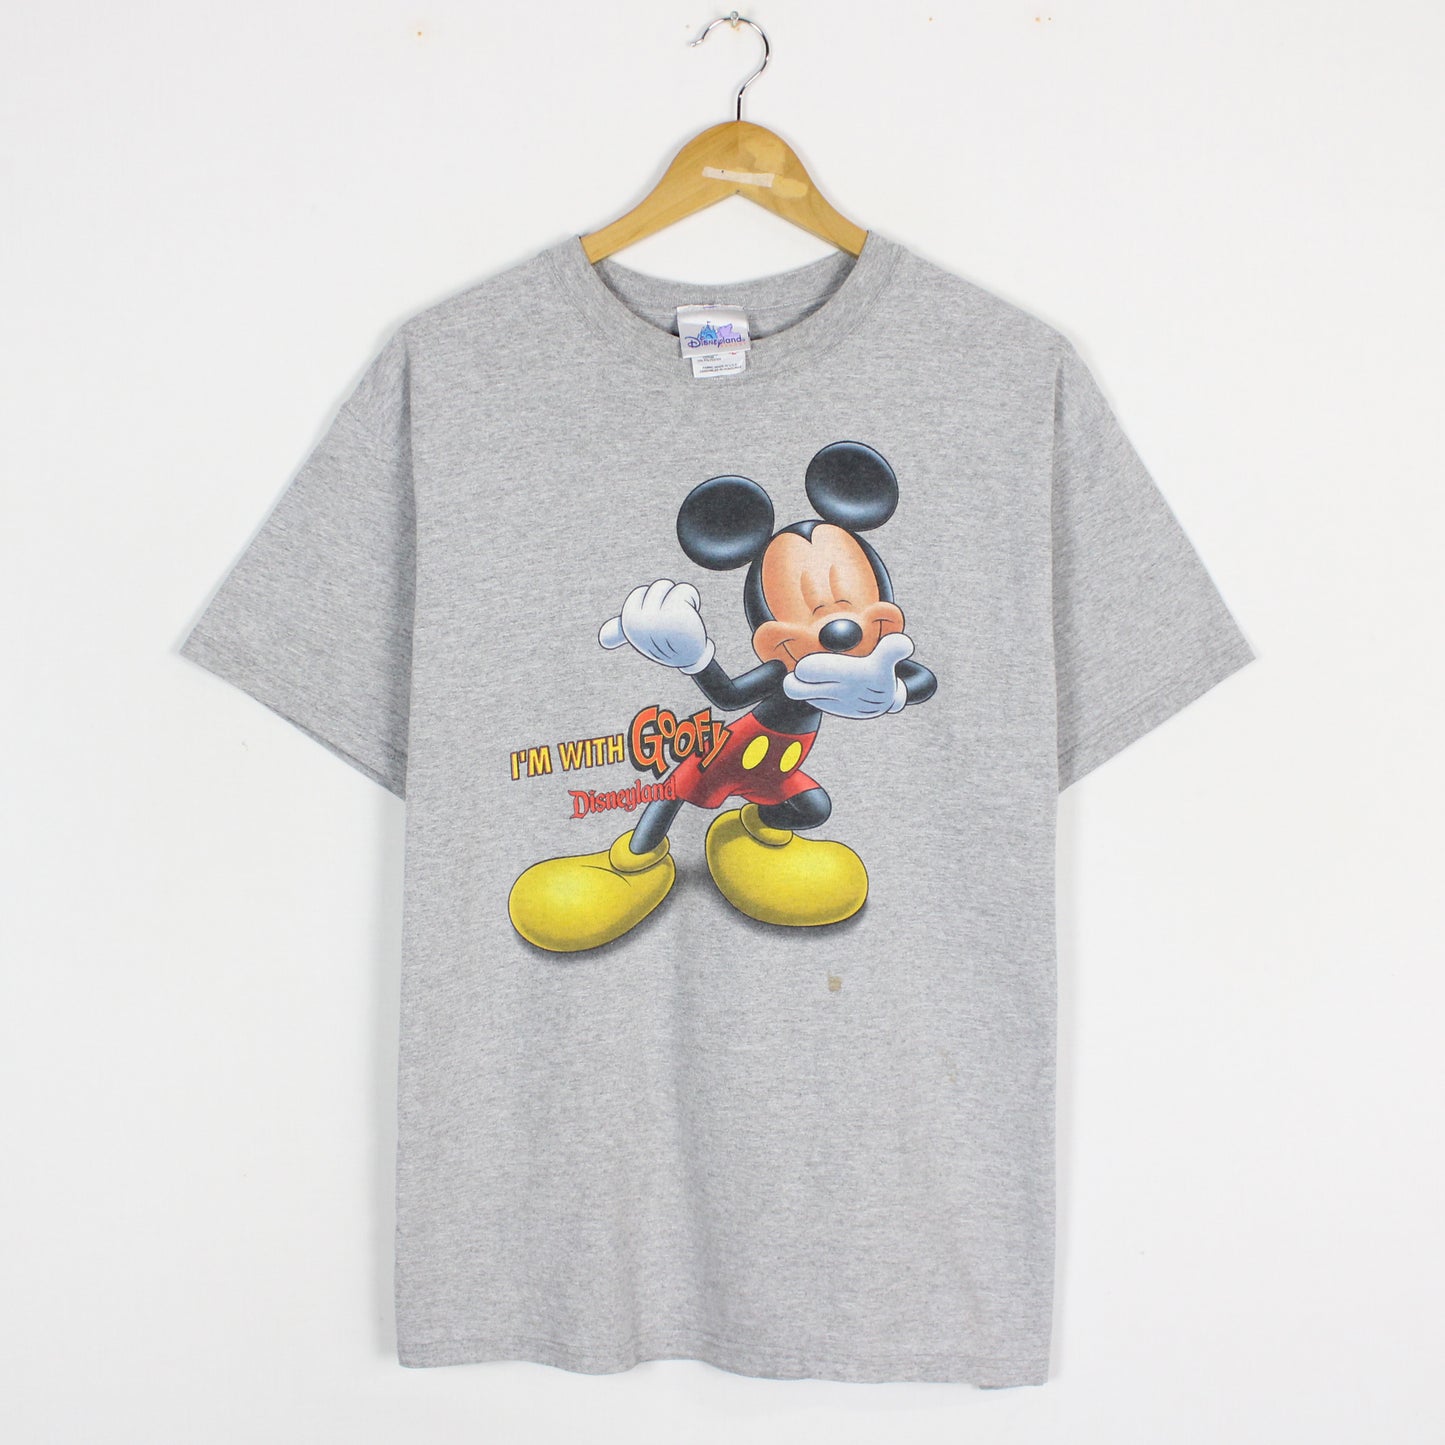 Vintage Mickey Mouse Disneyland Tee - L